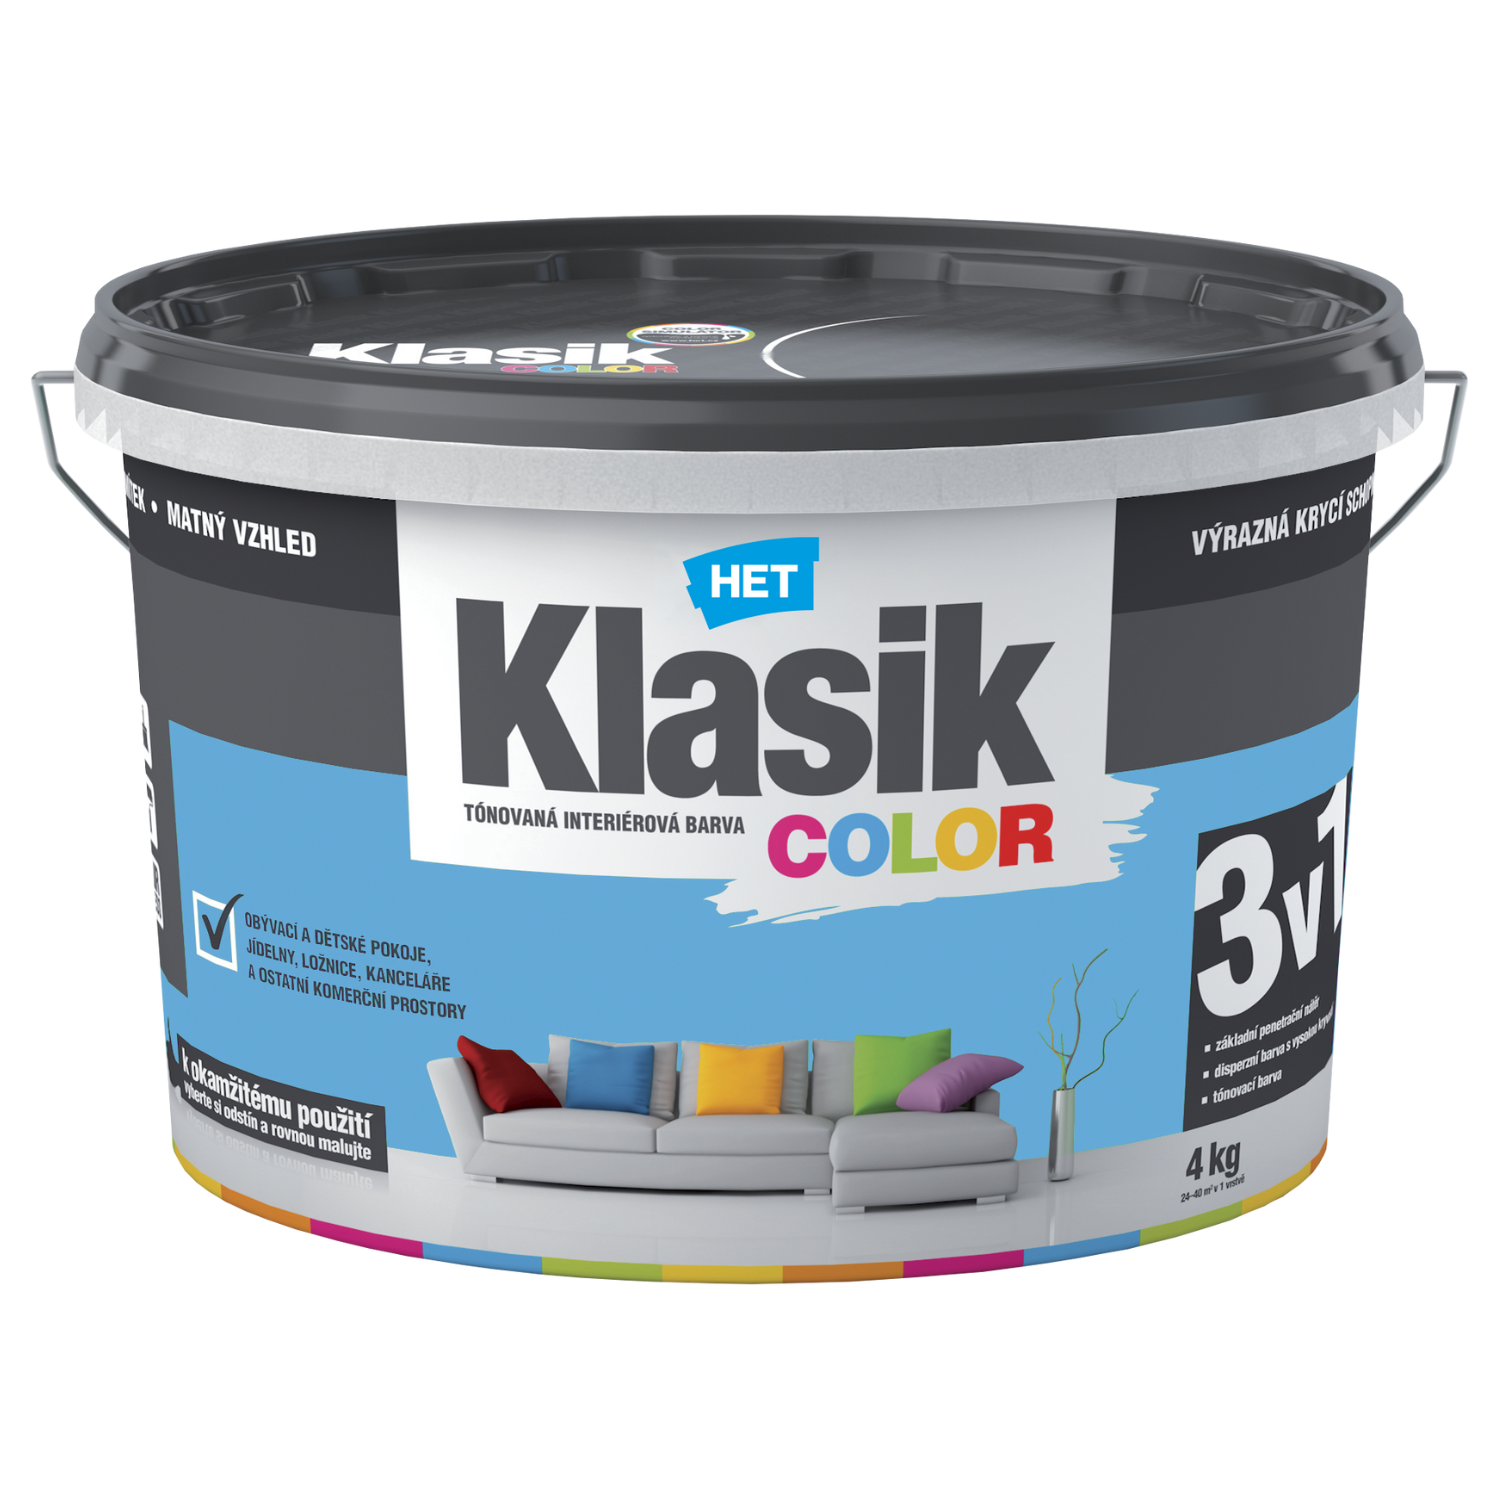 HET Klasik COLOR tónovaná interiérová akrylátová disperzná oteruvzdorná farba 4 kg, KC0417 - modrý azúrový